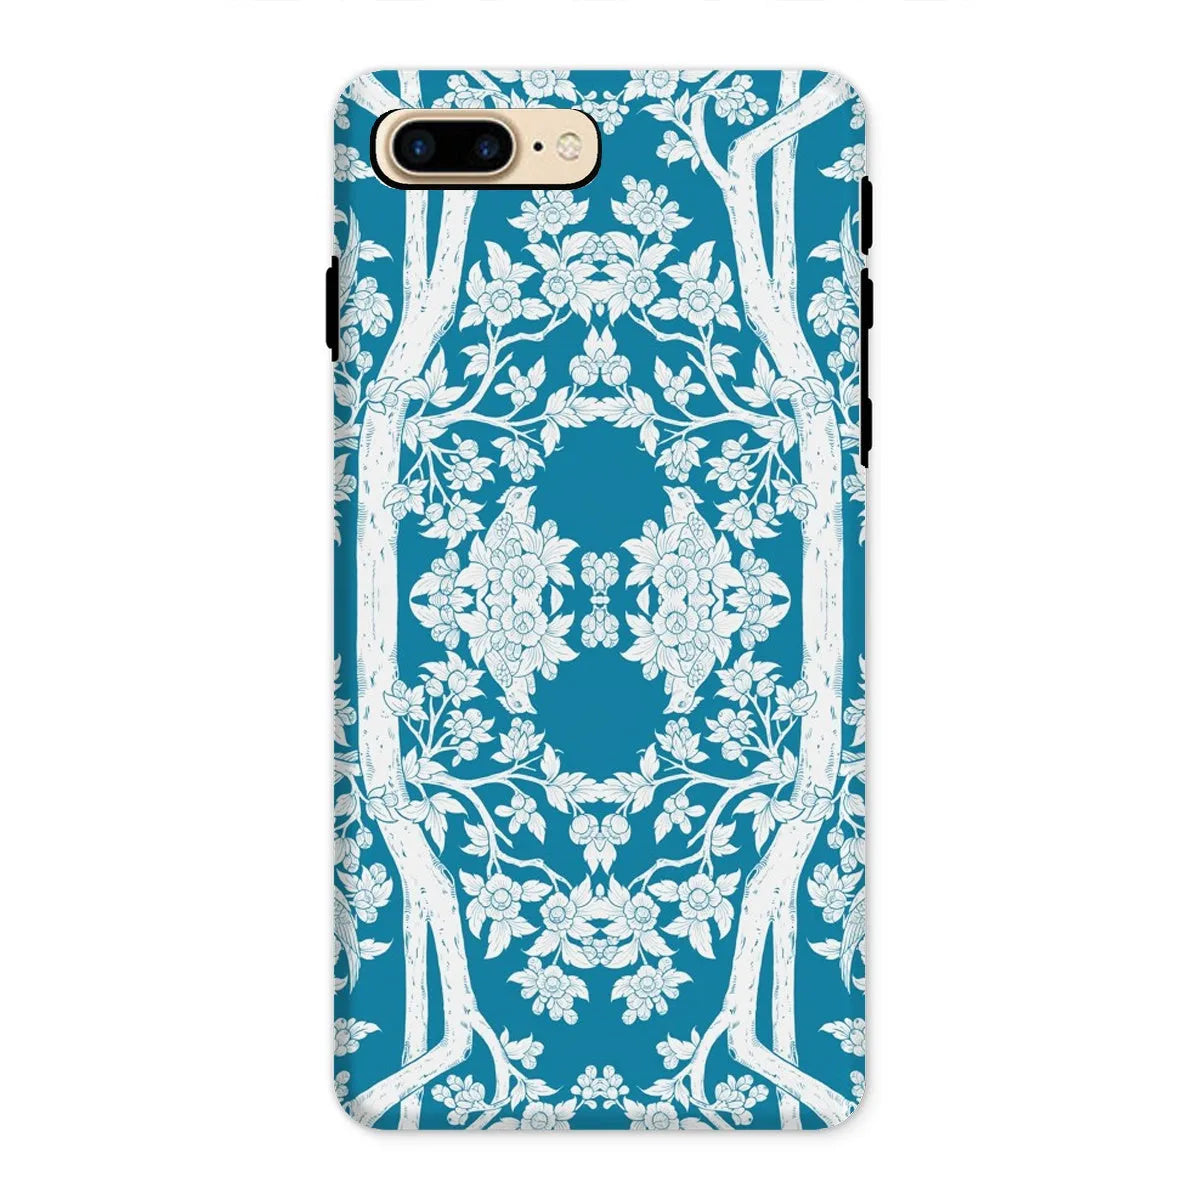 Aviary Blue Aesthetic Pattern Art Phone Case - Iphone 8 Plus / Matte - Mobile Phone Cases - Aesthetic Art